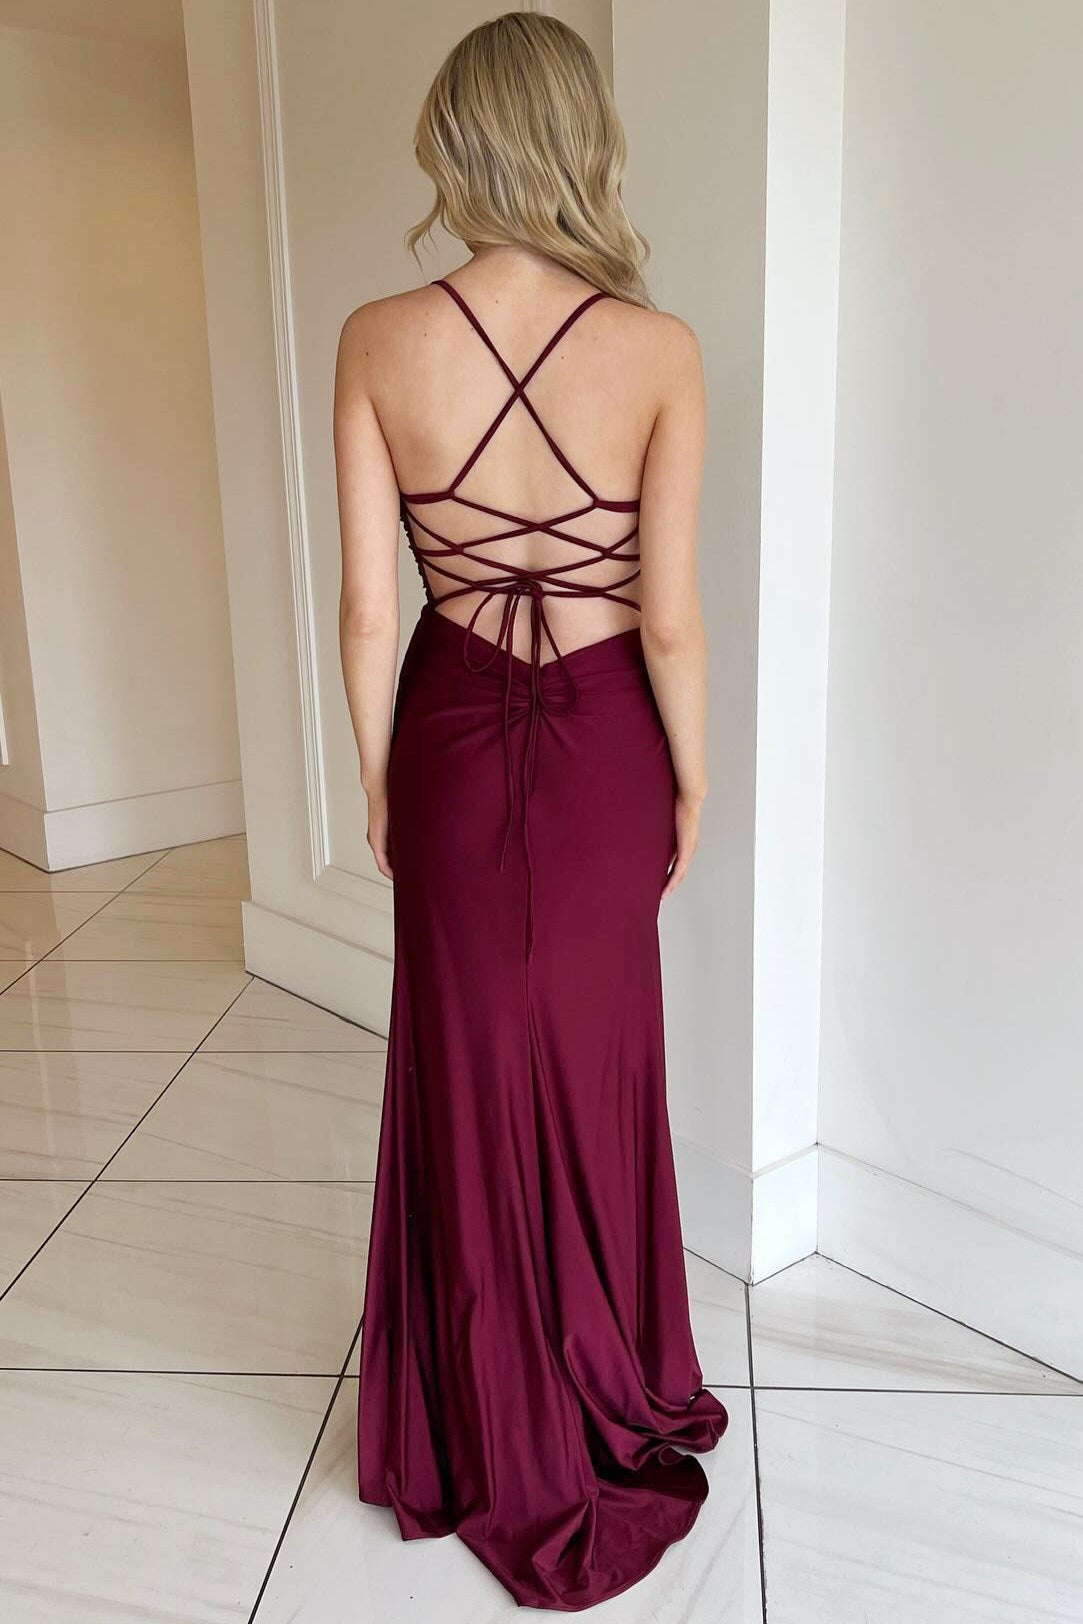 Rochelle | Burgundy V-Neck Lace-Up Long Formal Dress with Slit